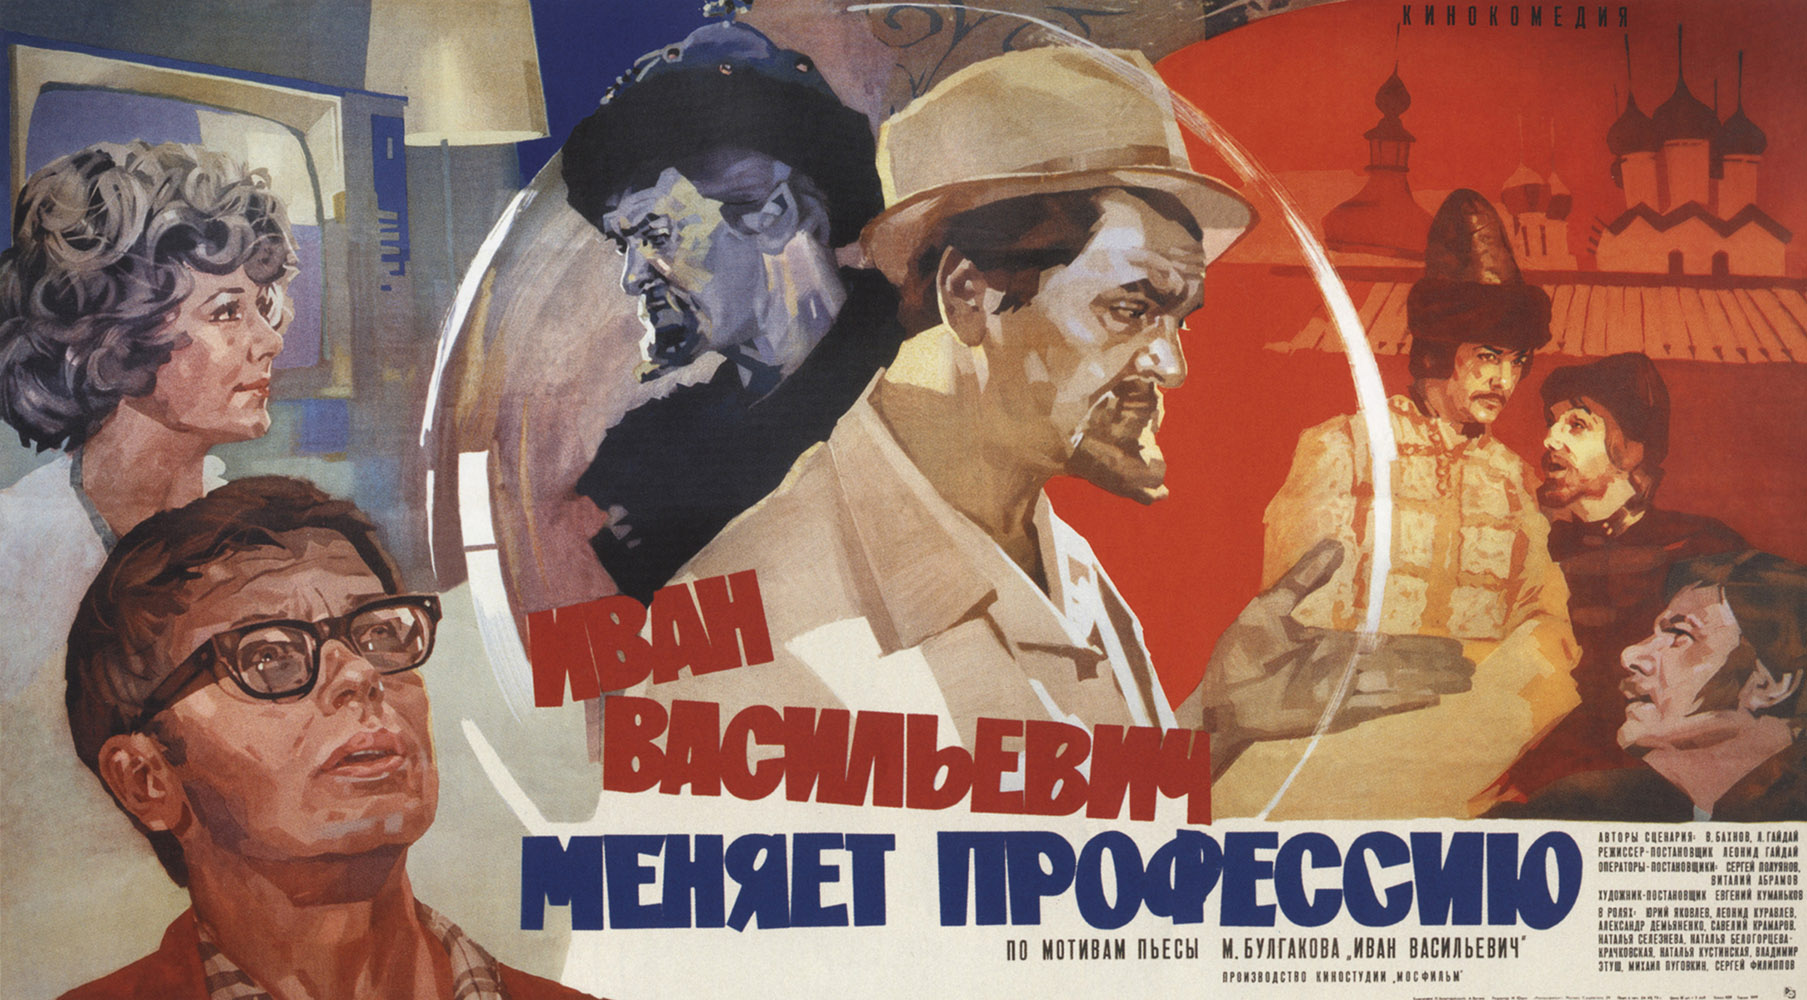 A Russian Movie classic